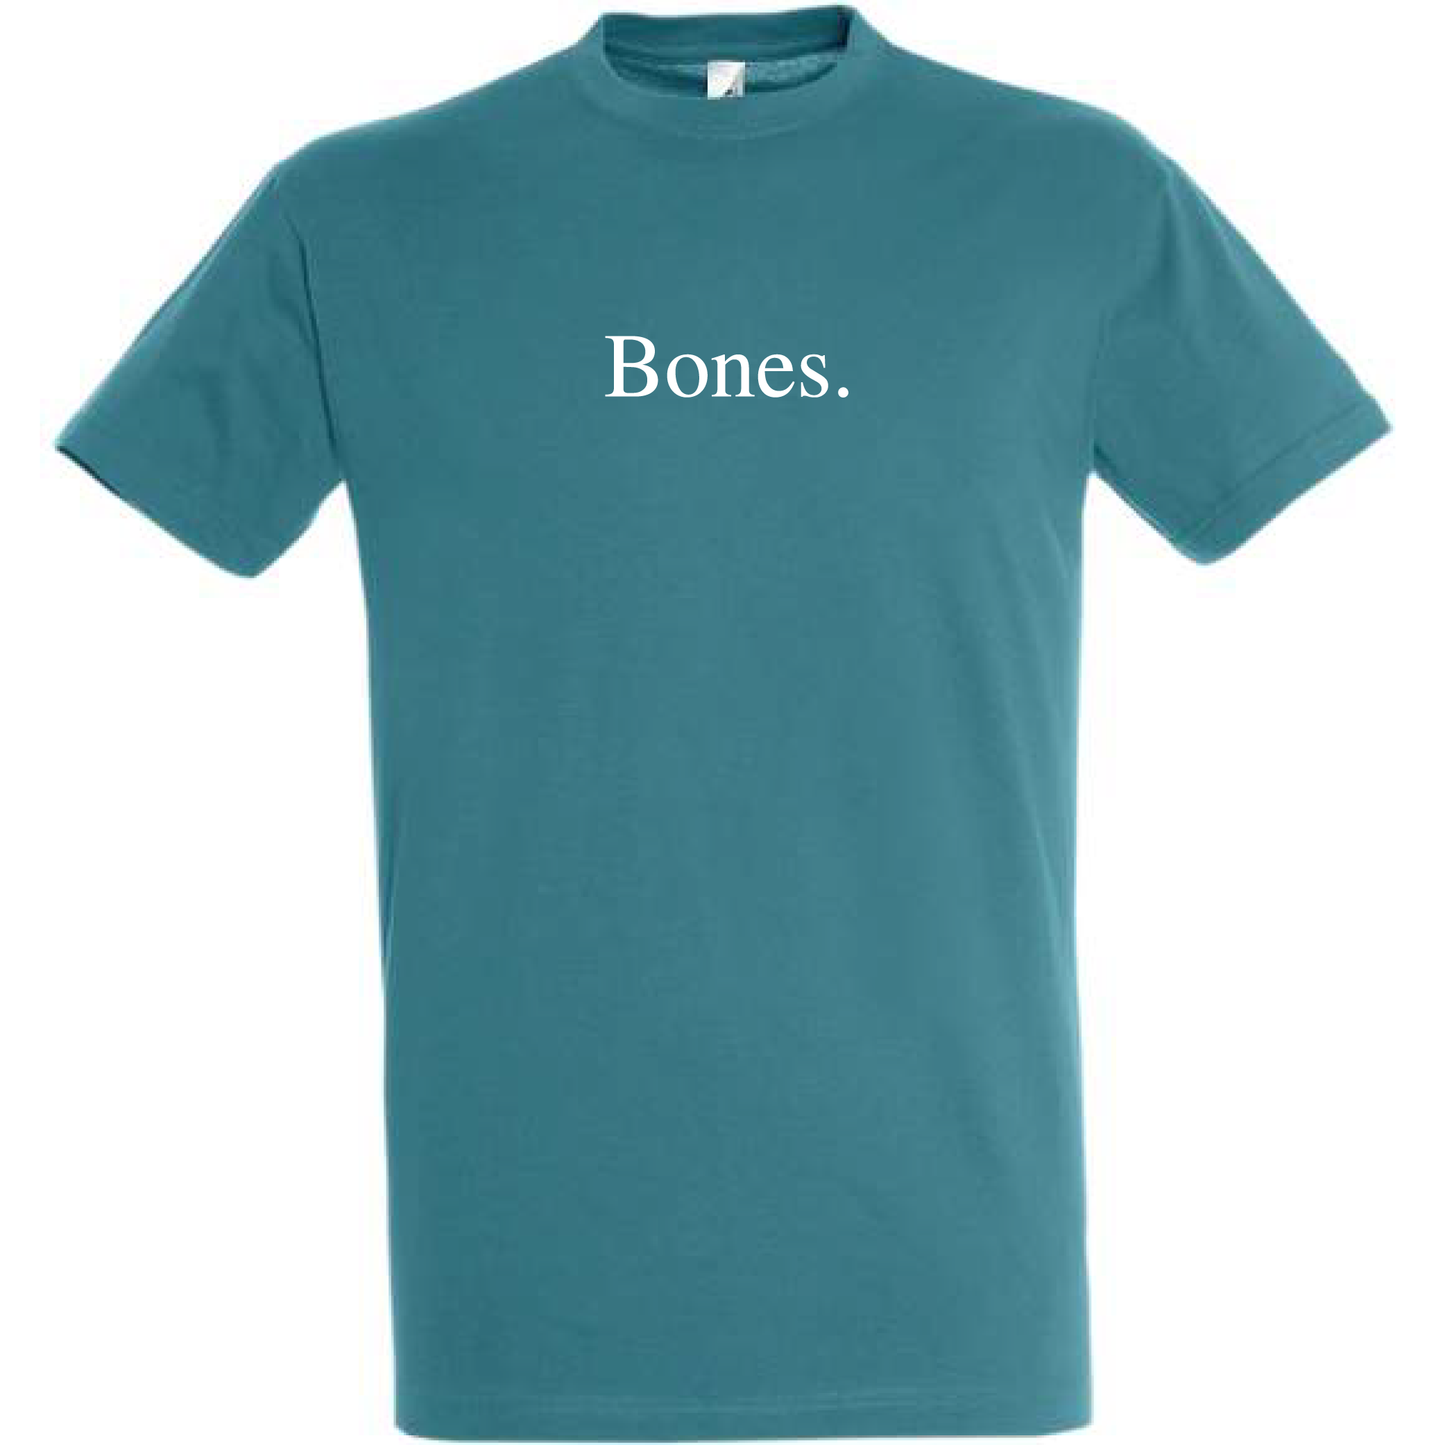 N°2 - Bones. Originals